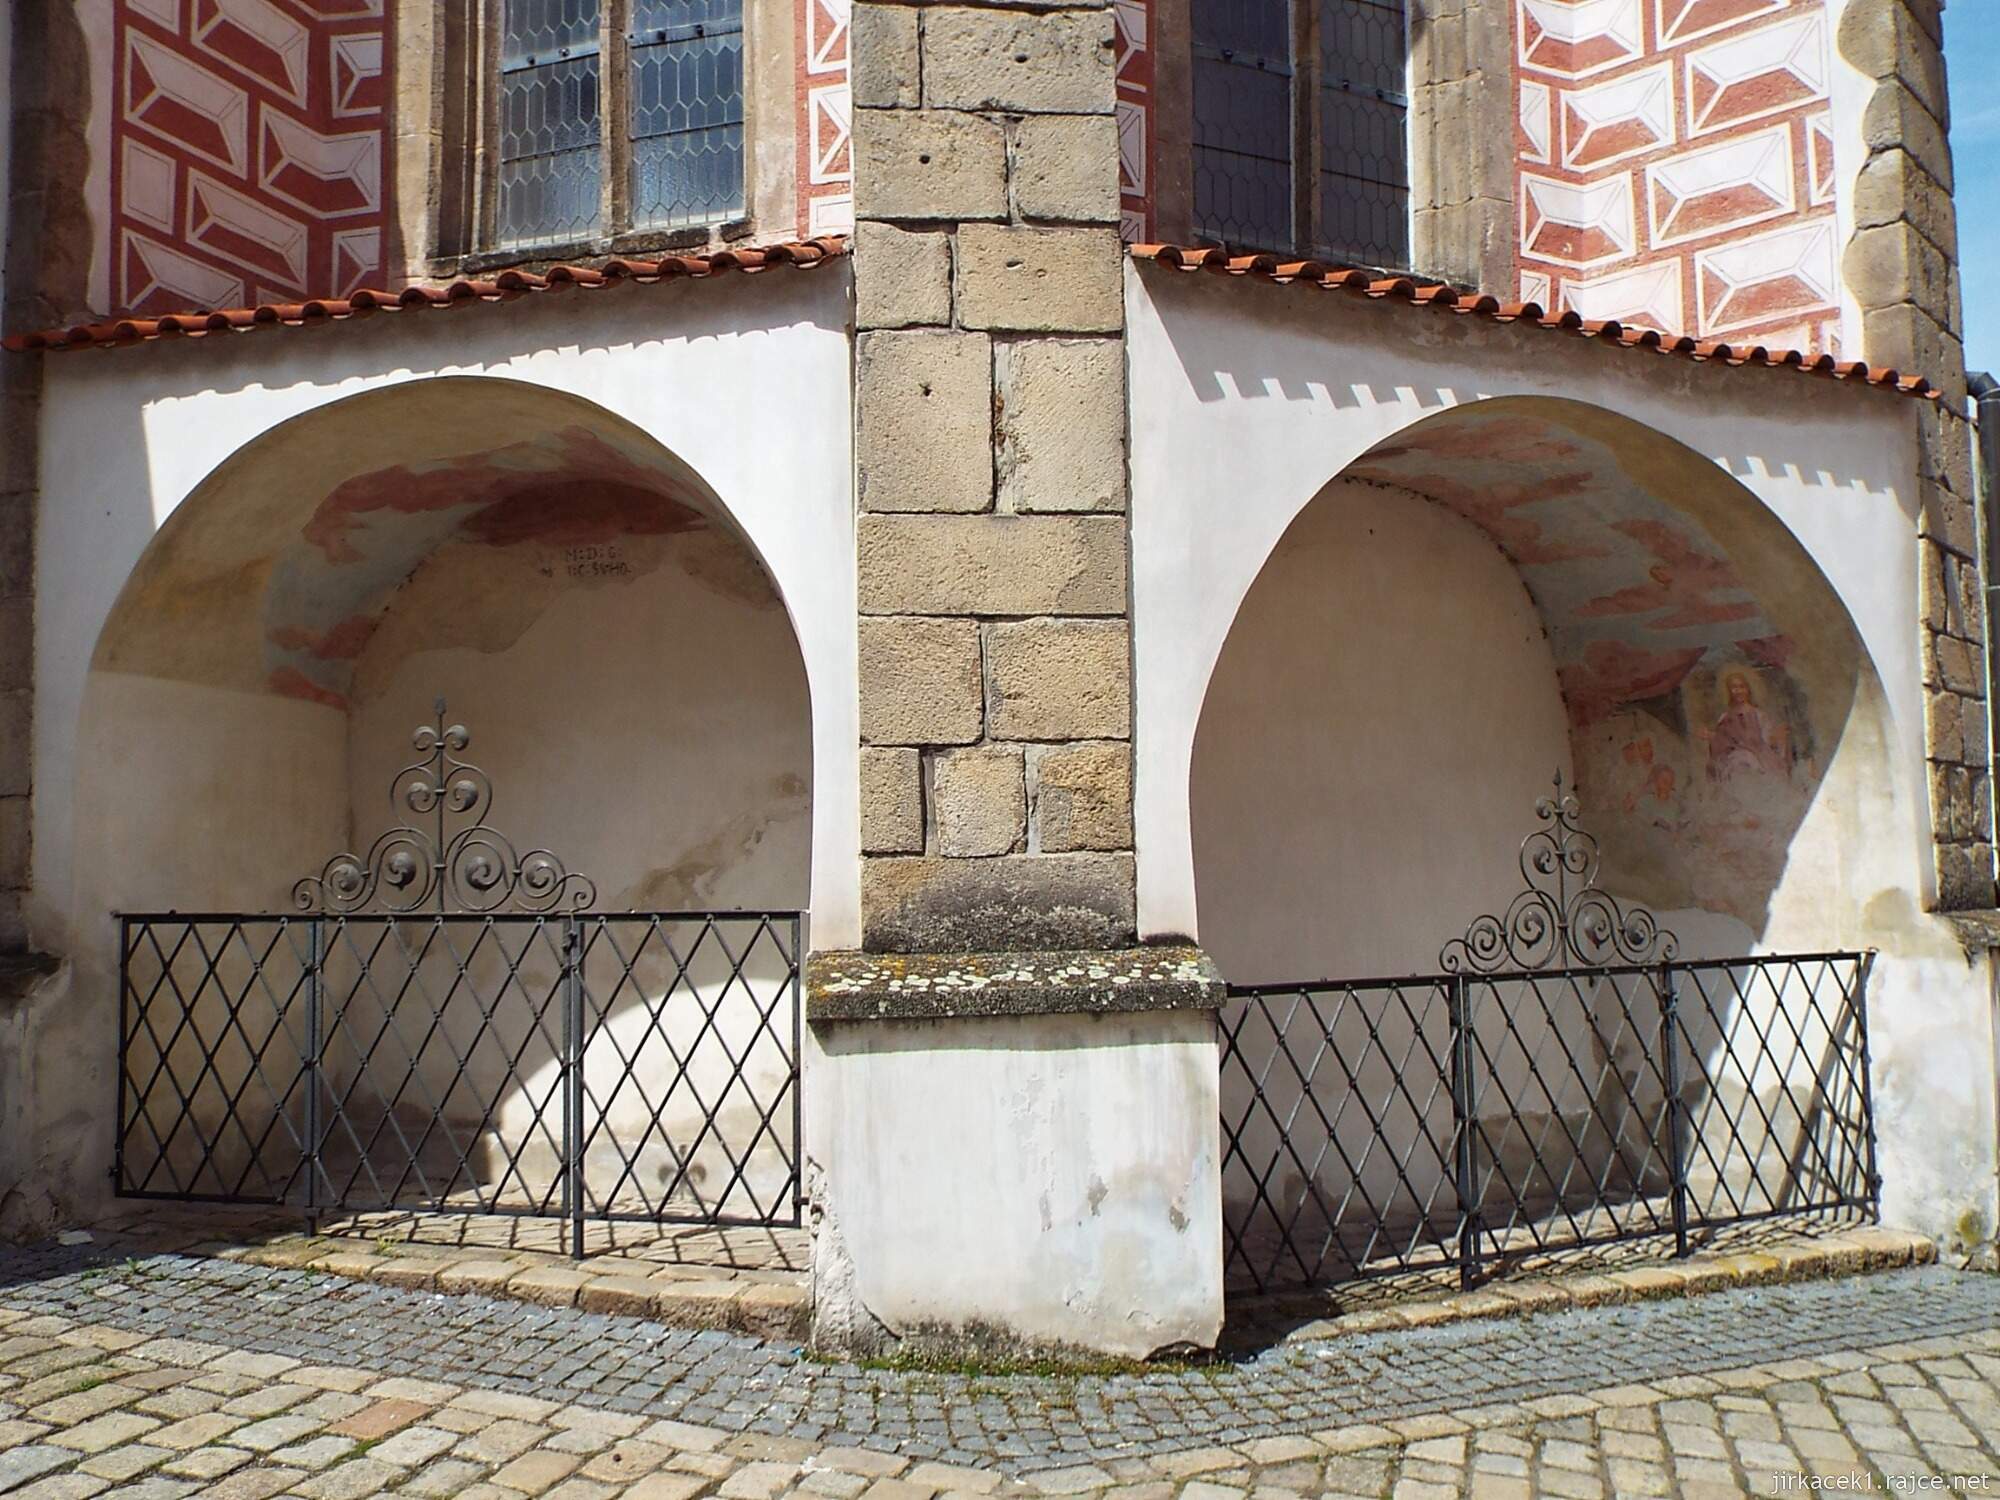 H - Pelhřimov - Kostel sv. Bartoloměje 05 - výklenky ve zdi s freskami Kalvárie